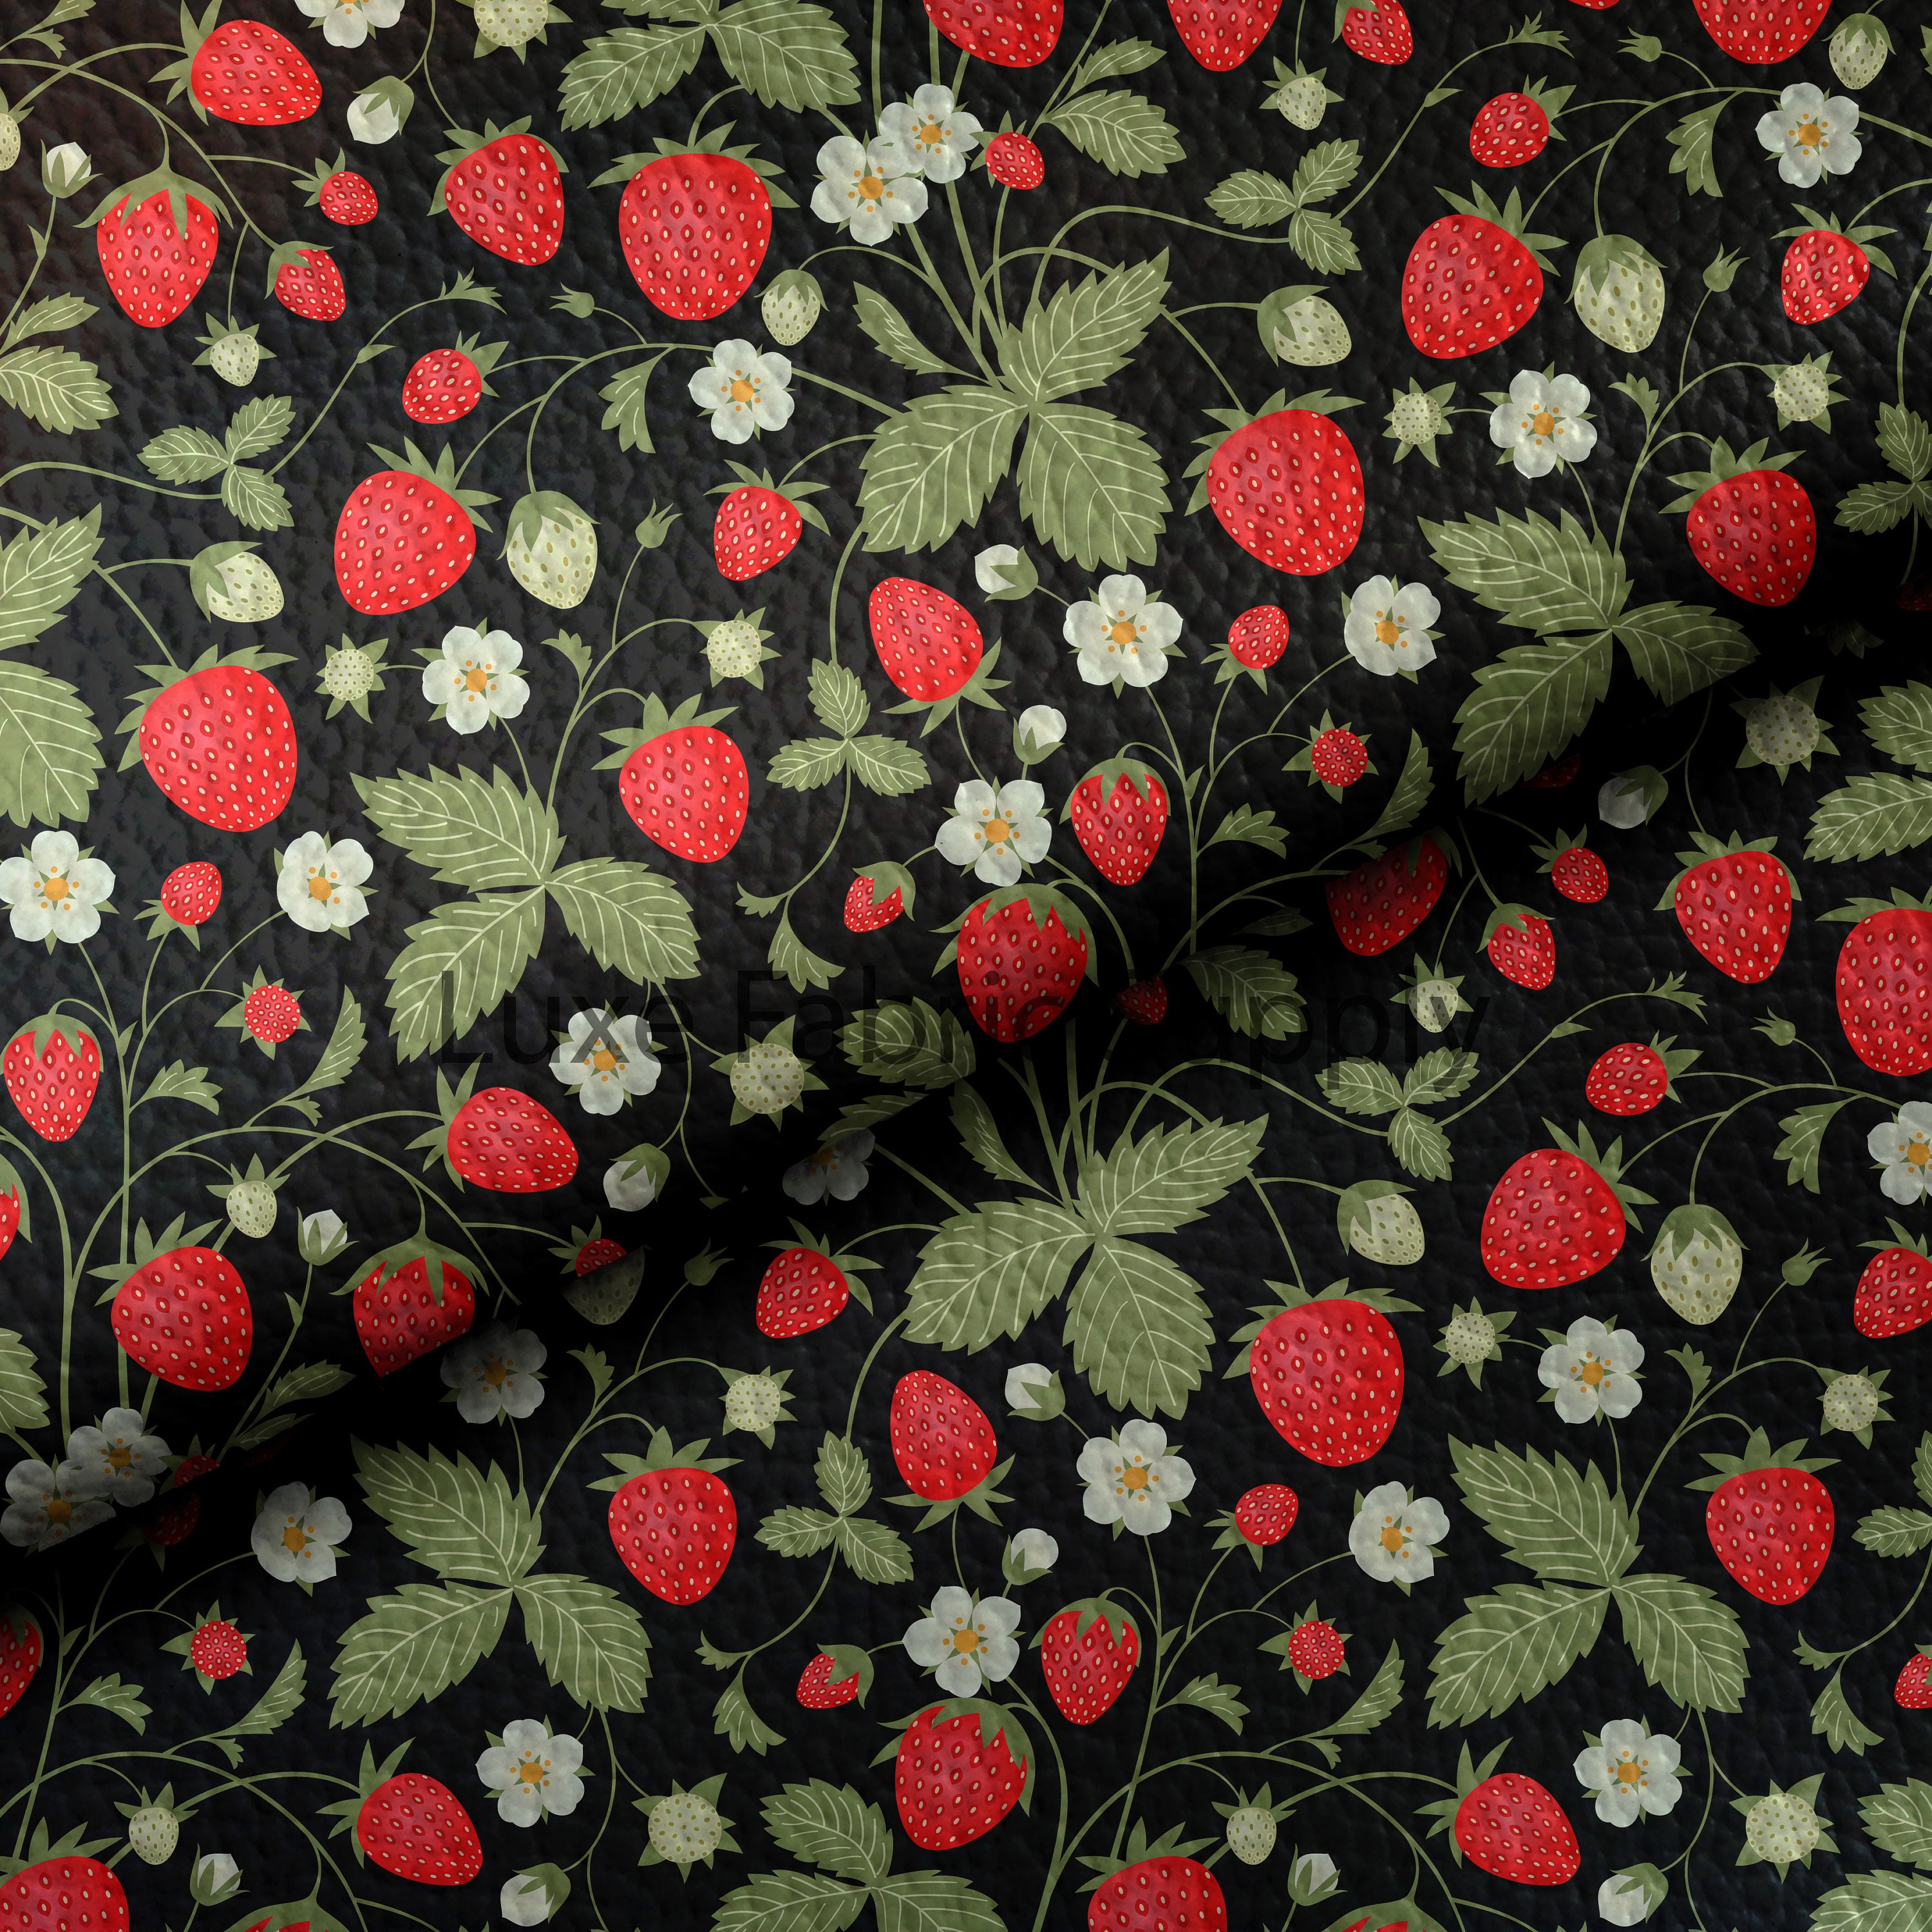 Strawberry Pattern ☆ Pattern Vinyl, Faux Leather